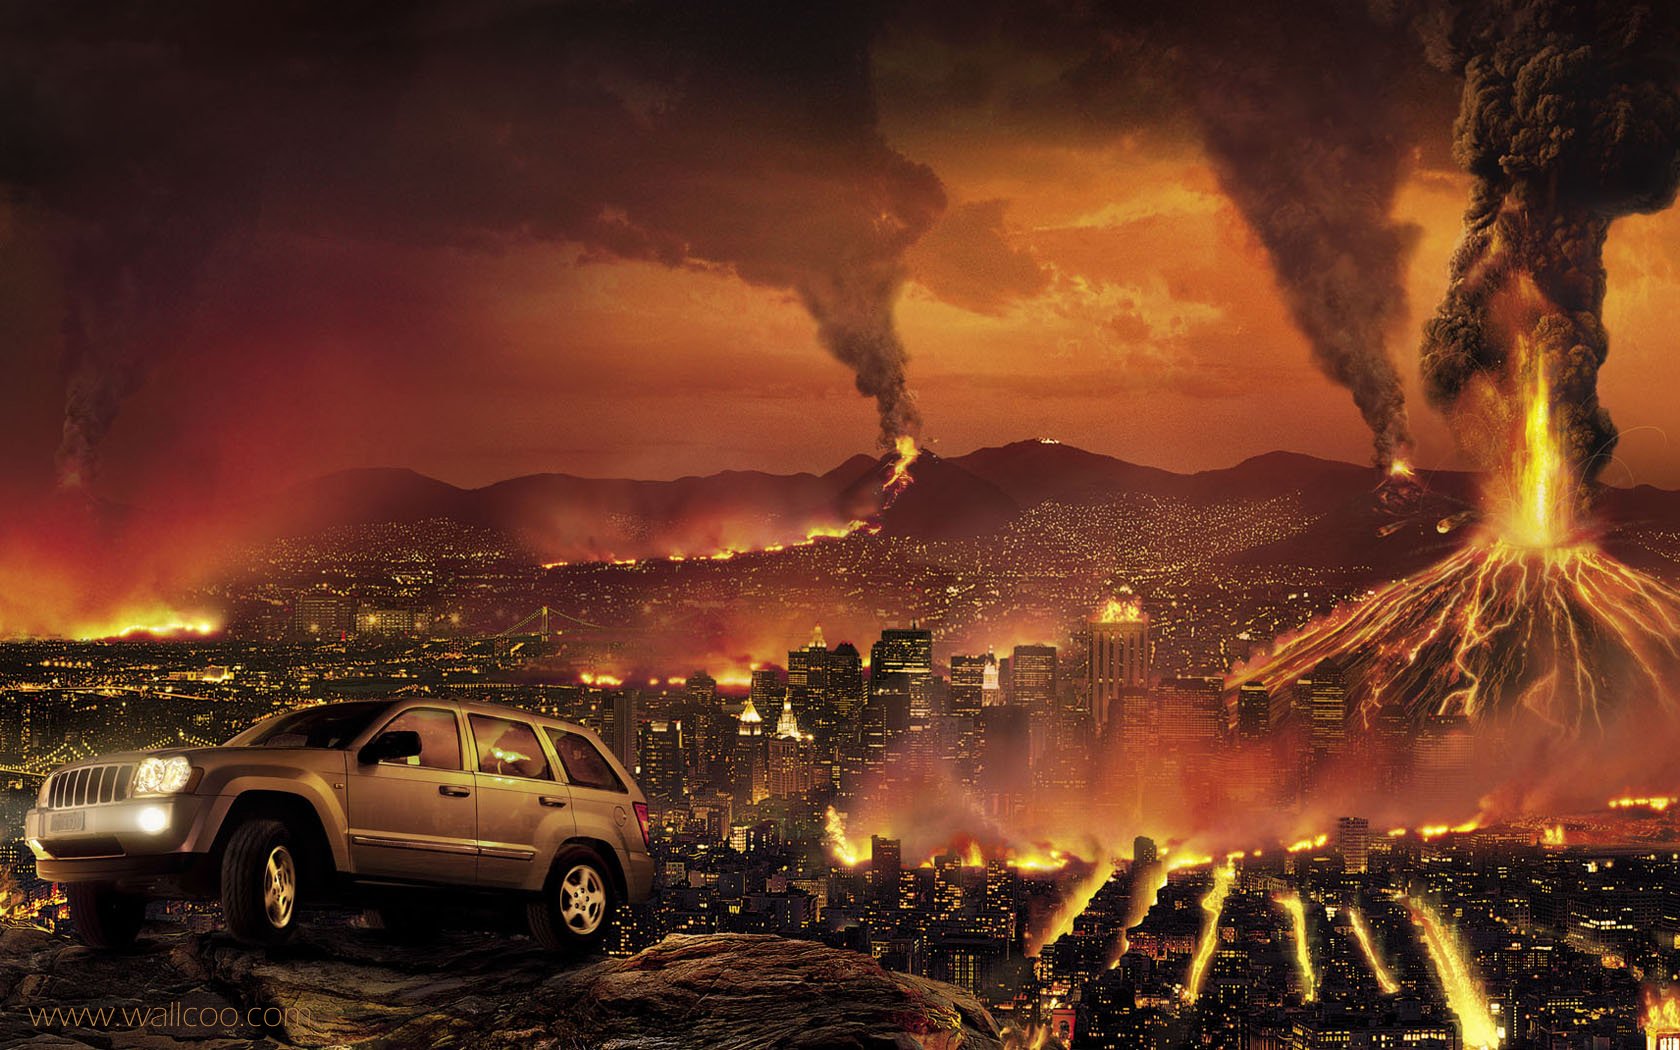 General 1680x1050 photoshopped digital art car apocalyptic fire vehicle volcanic eruption volcano sky cityscape burning Jeep Grand Cheeroke Jeep